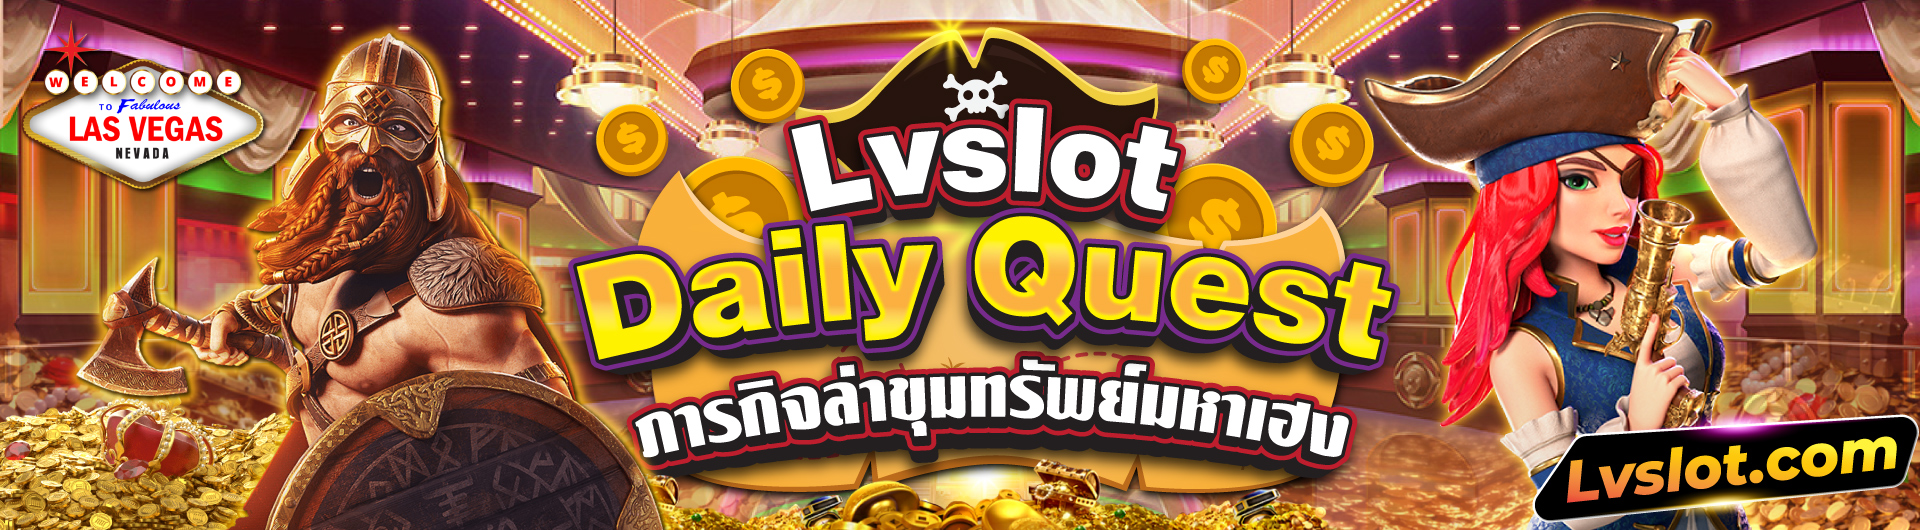 Lvslot Daily Quest ภารกิจล่าขุมทรัพย์มหาเฮง